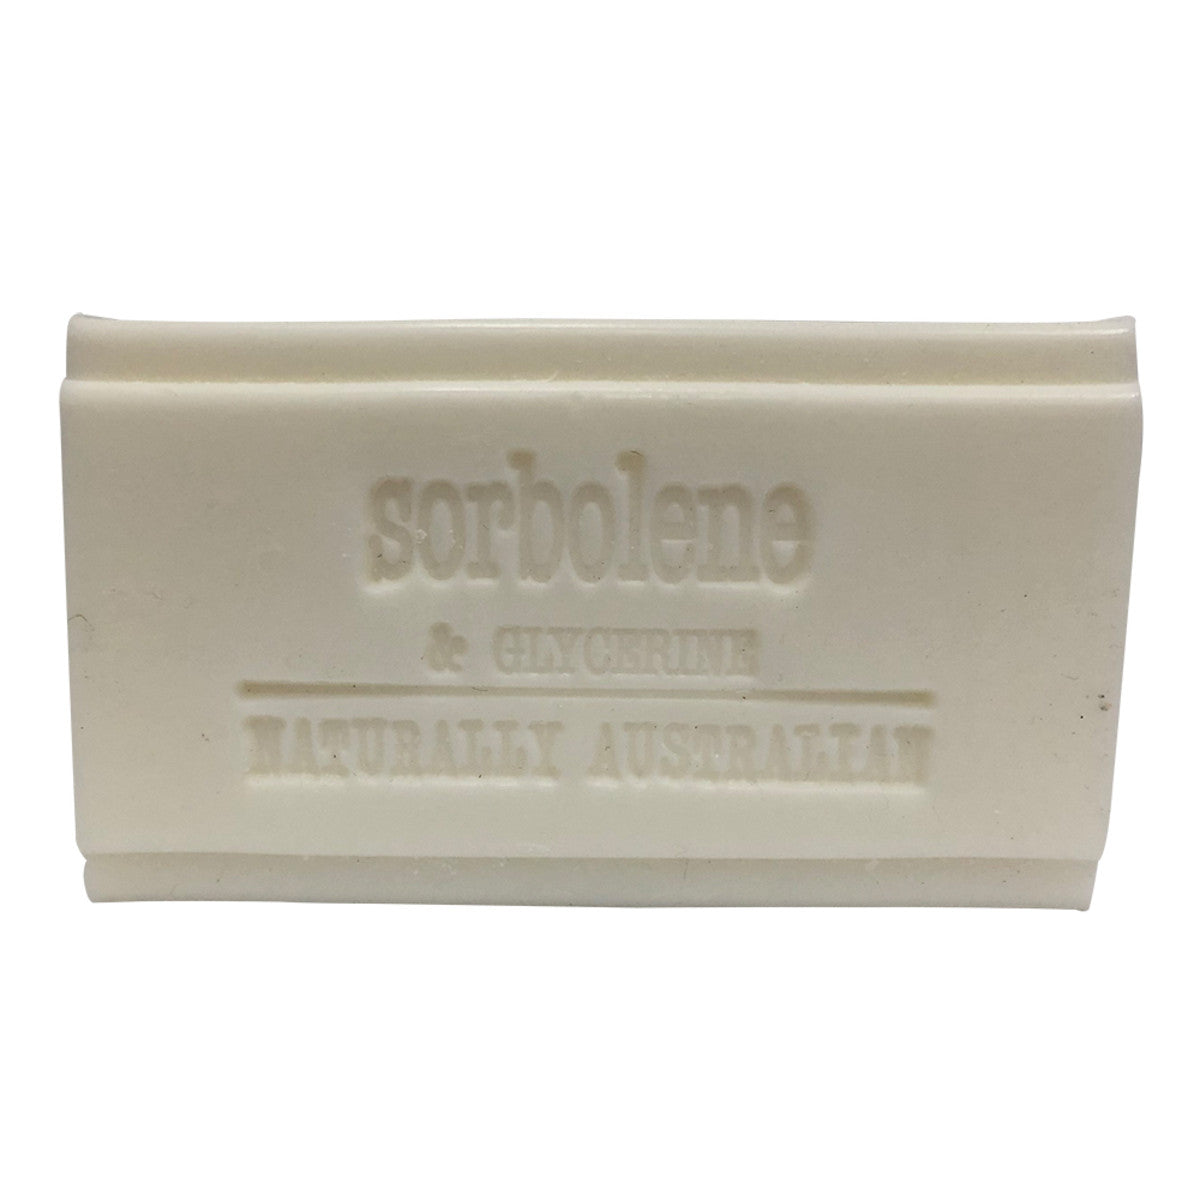 Clover Fields - Sorbolene and Glycerine Cream Soap